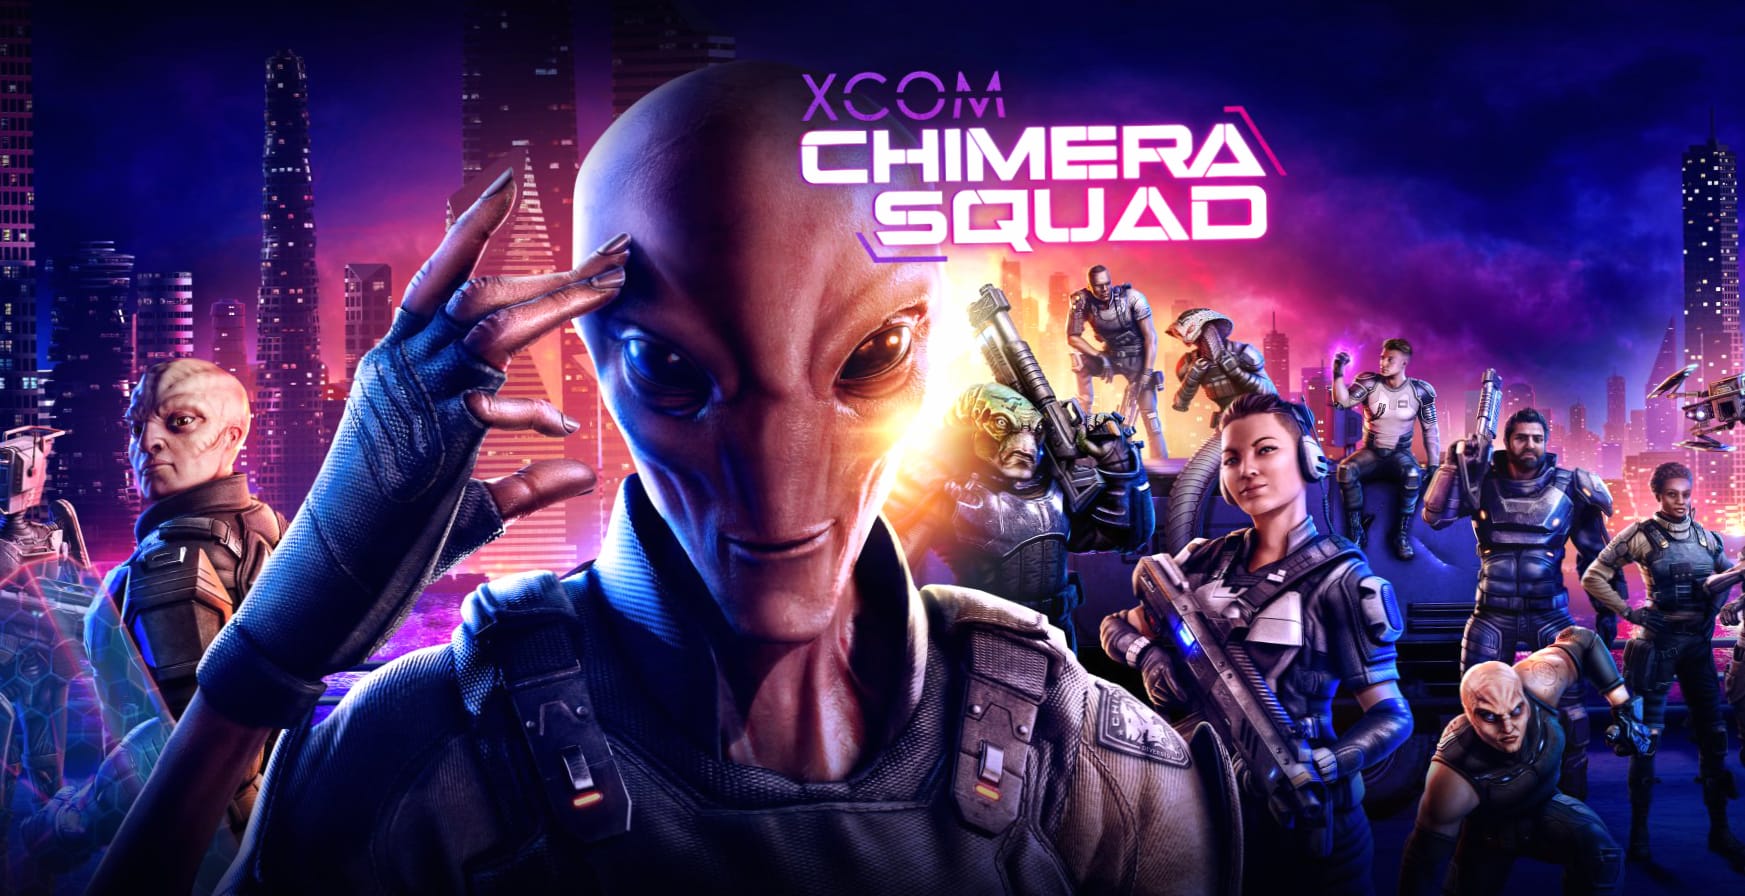 XCOM Chimera Squad at 320 x 480 iPhone size wallpapers HD quality